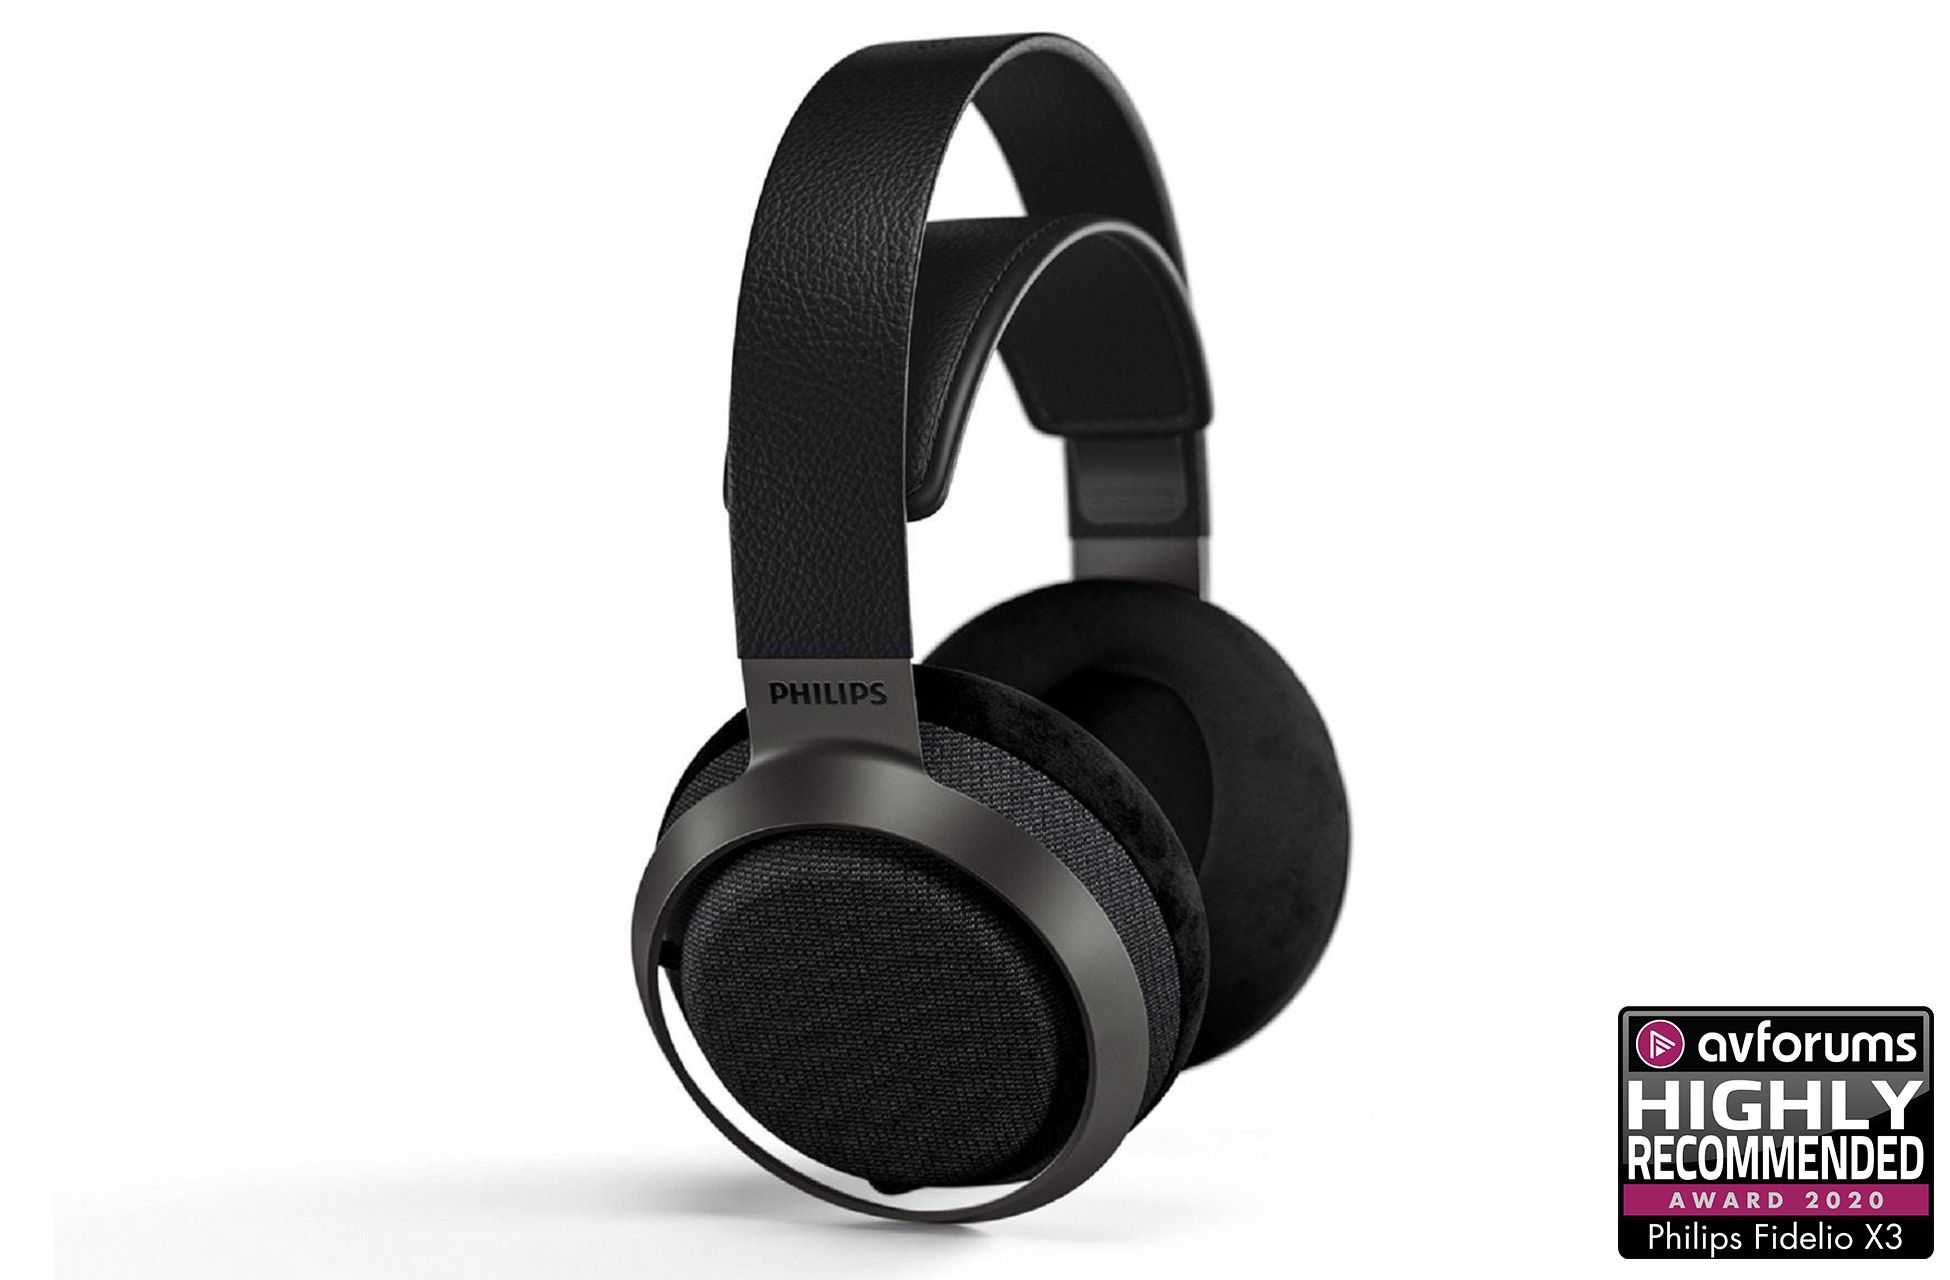  Philips Fidelio X3 (Black) Over Ear Open Back Headphones